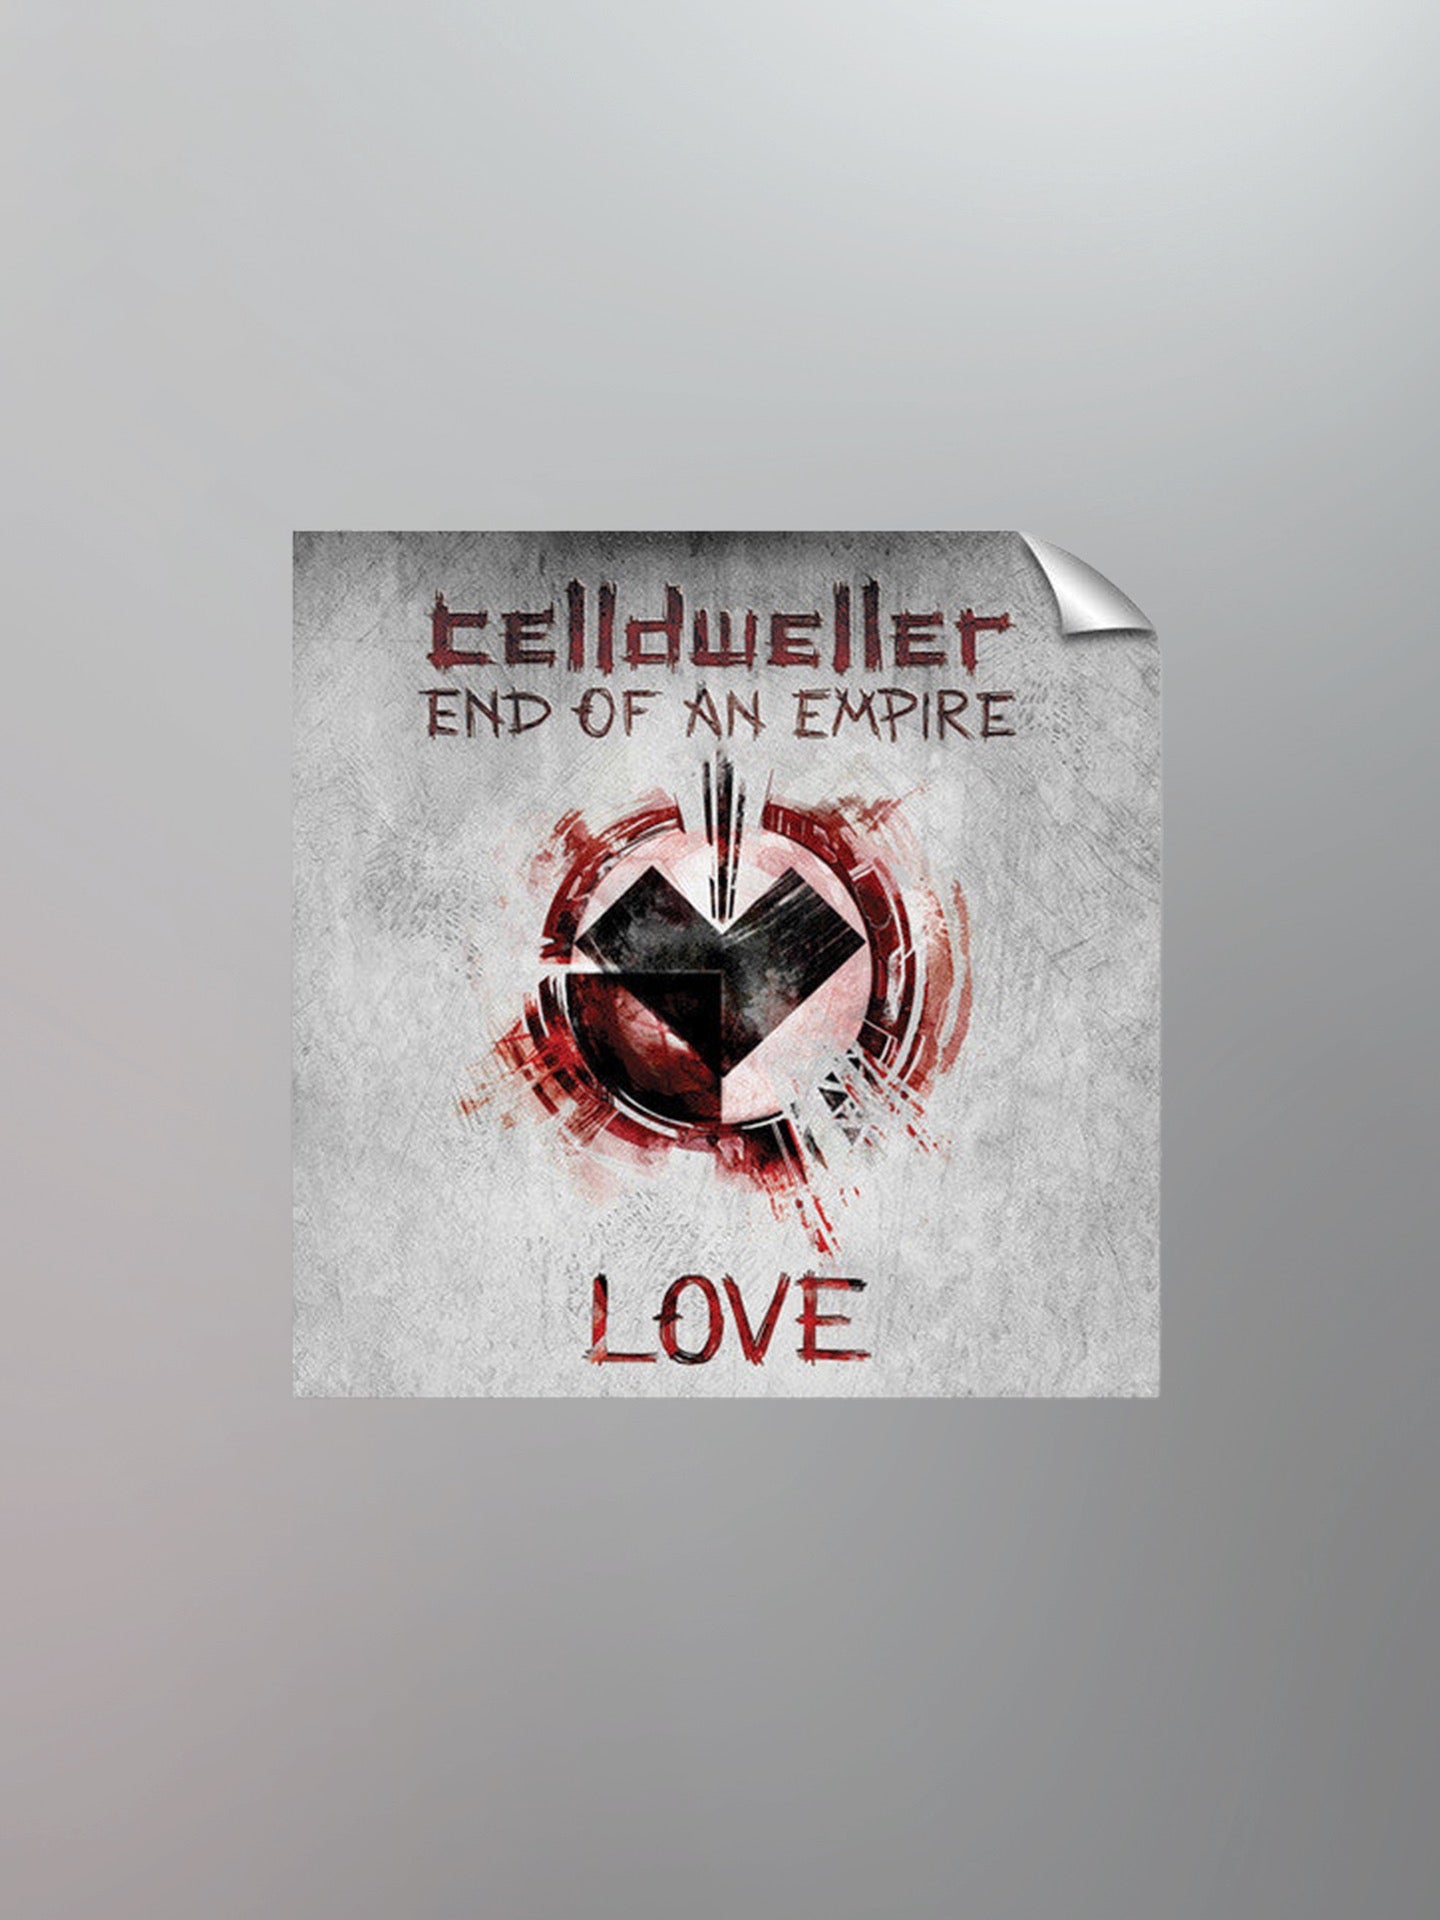 Celldweller - Love 5x5" Sticker